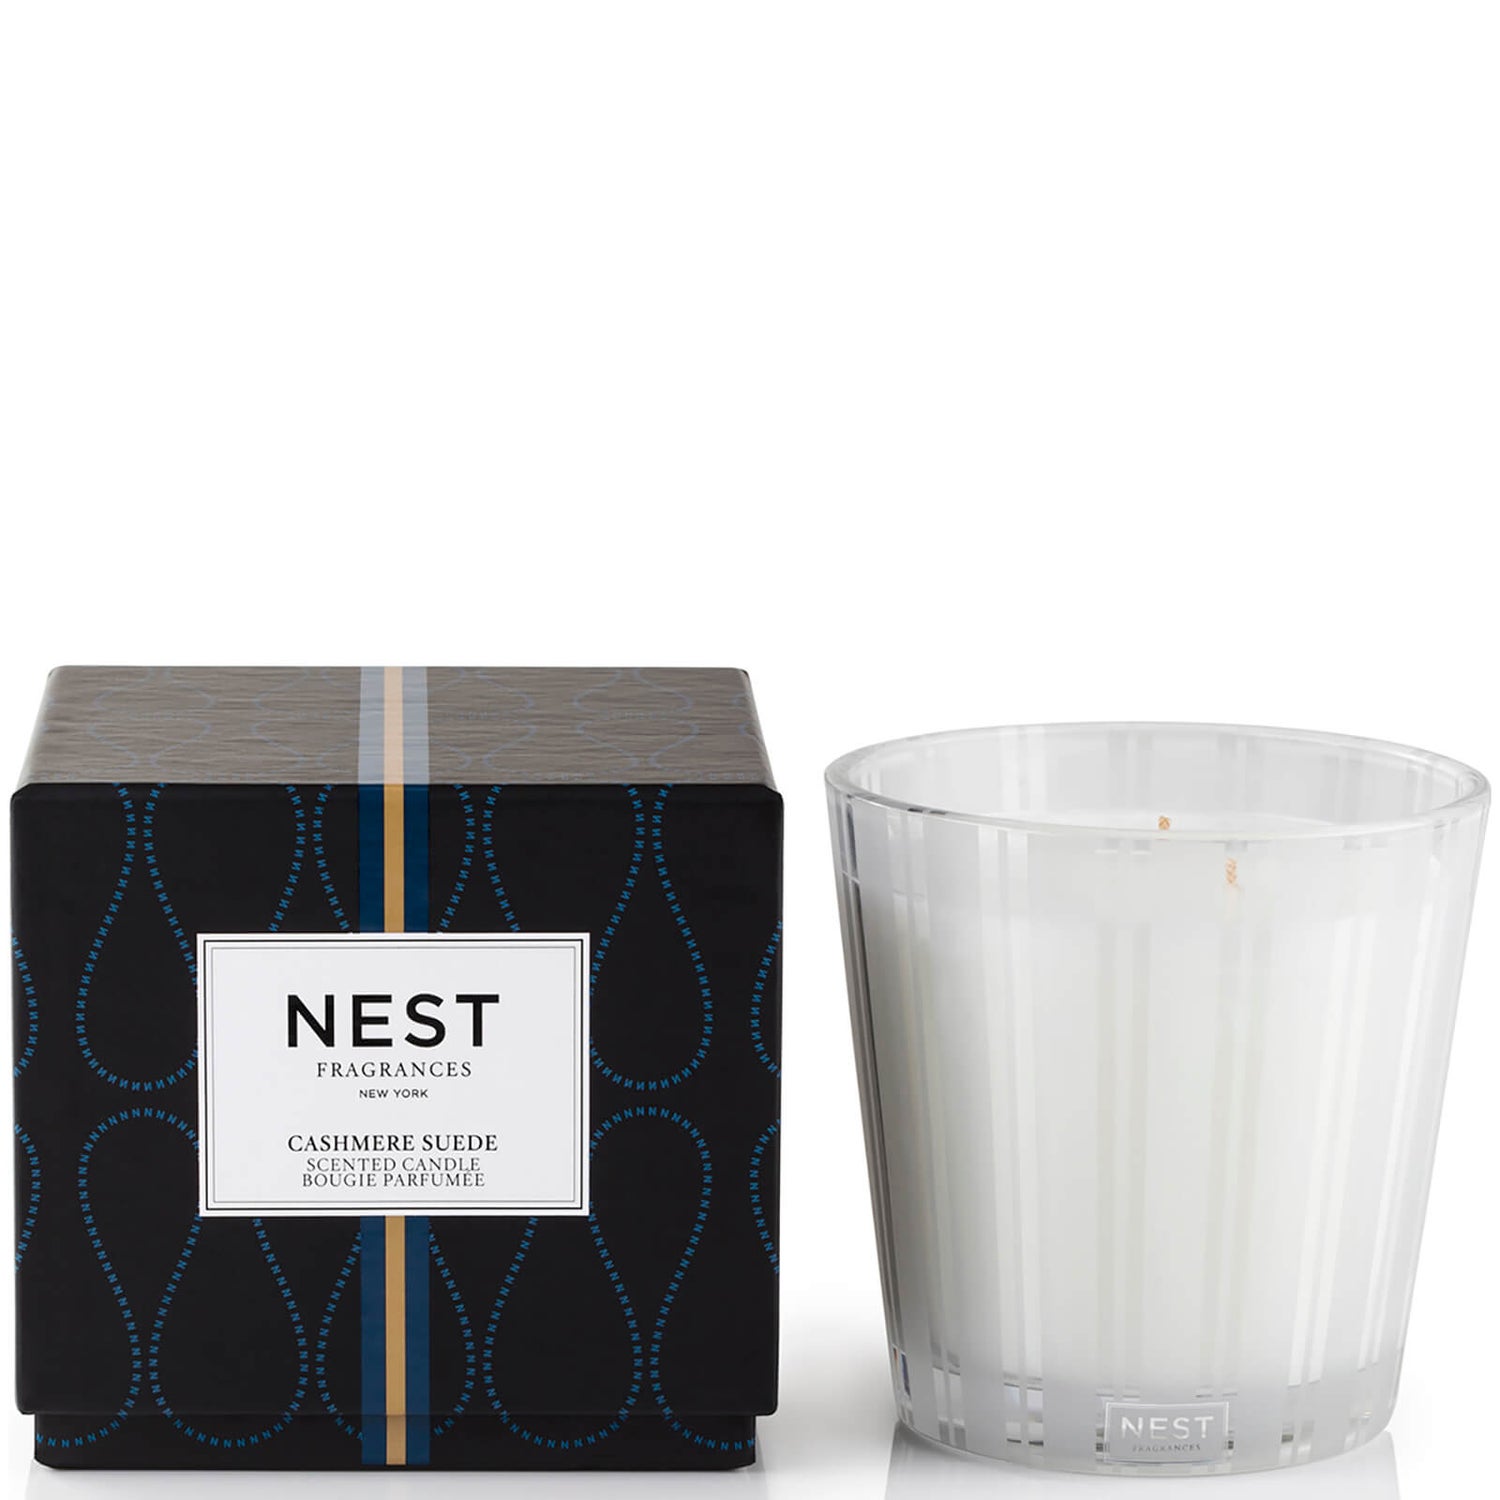 NEST Fragrances Cashmere Suede 3-Wick Candle